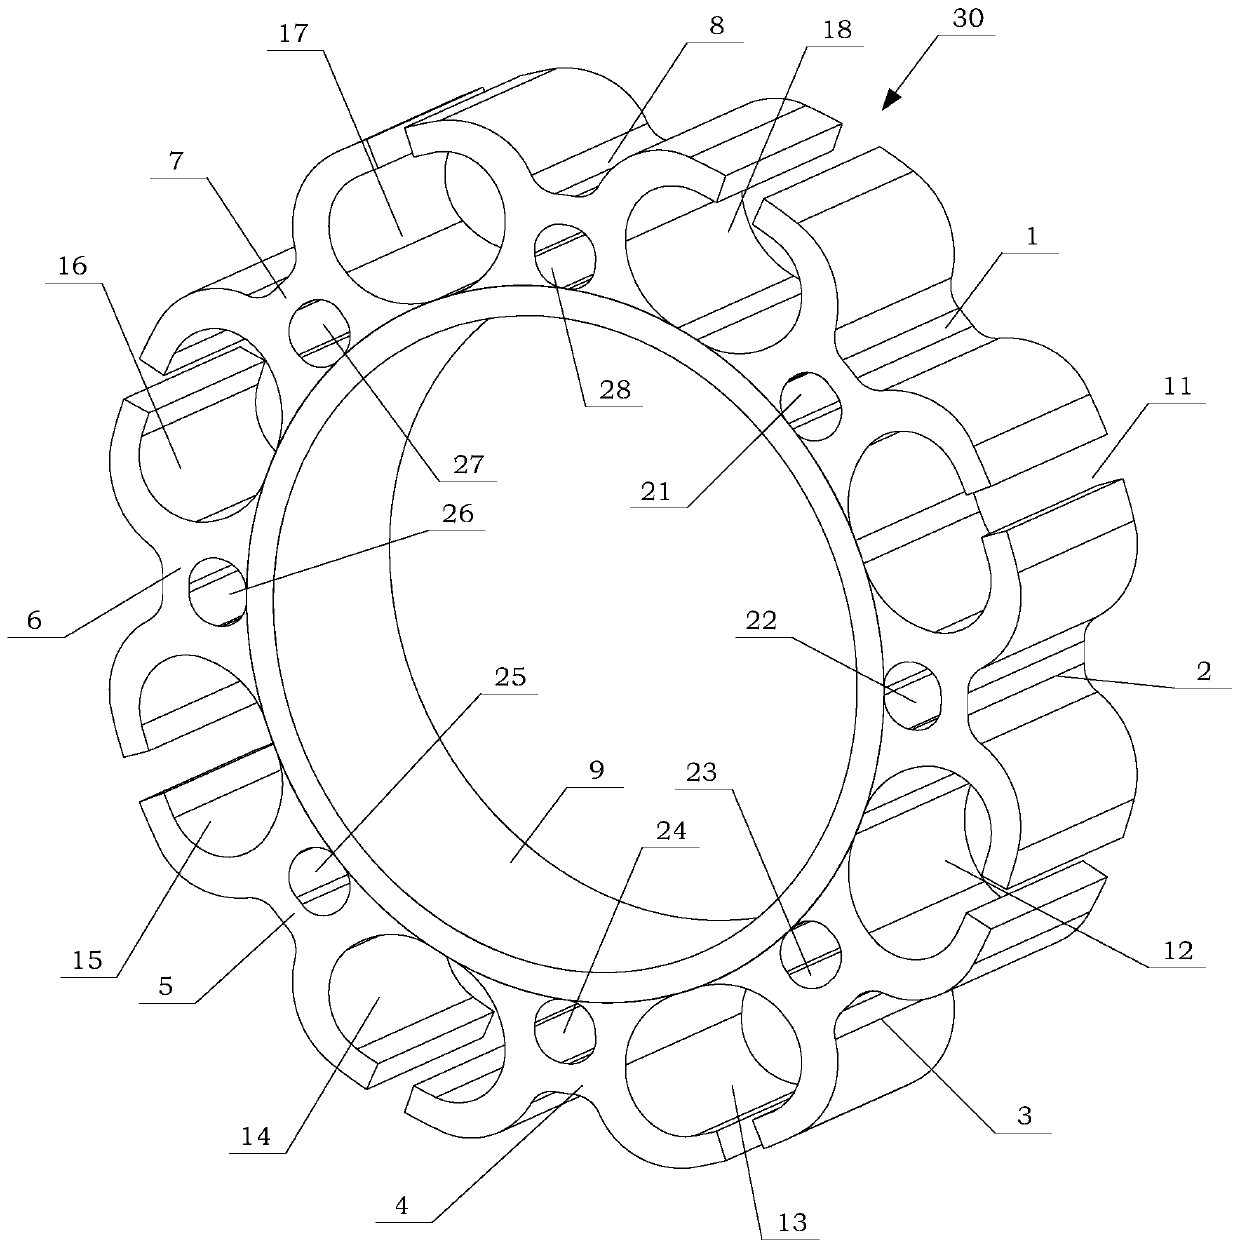 Segmented open flexible segment radial protection bearing for magnetic bearing